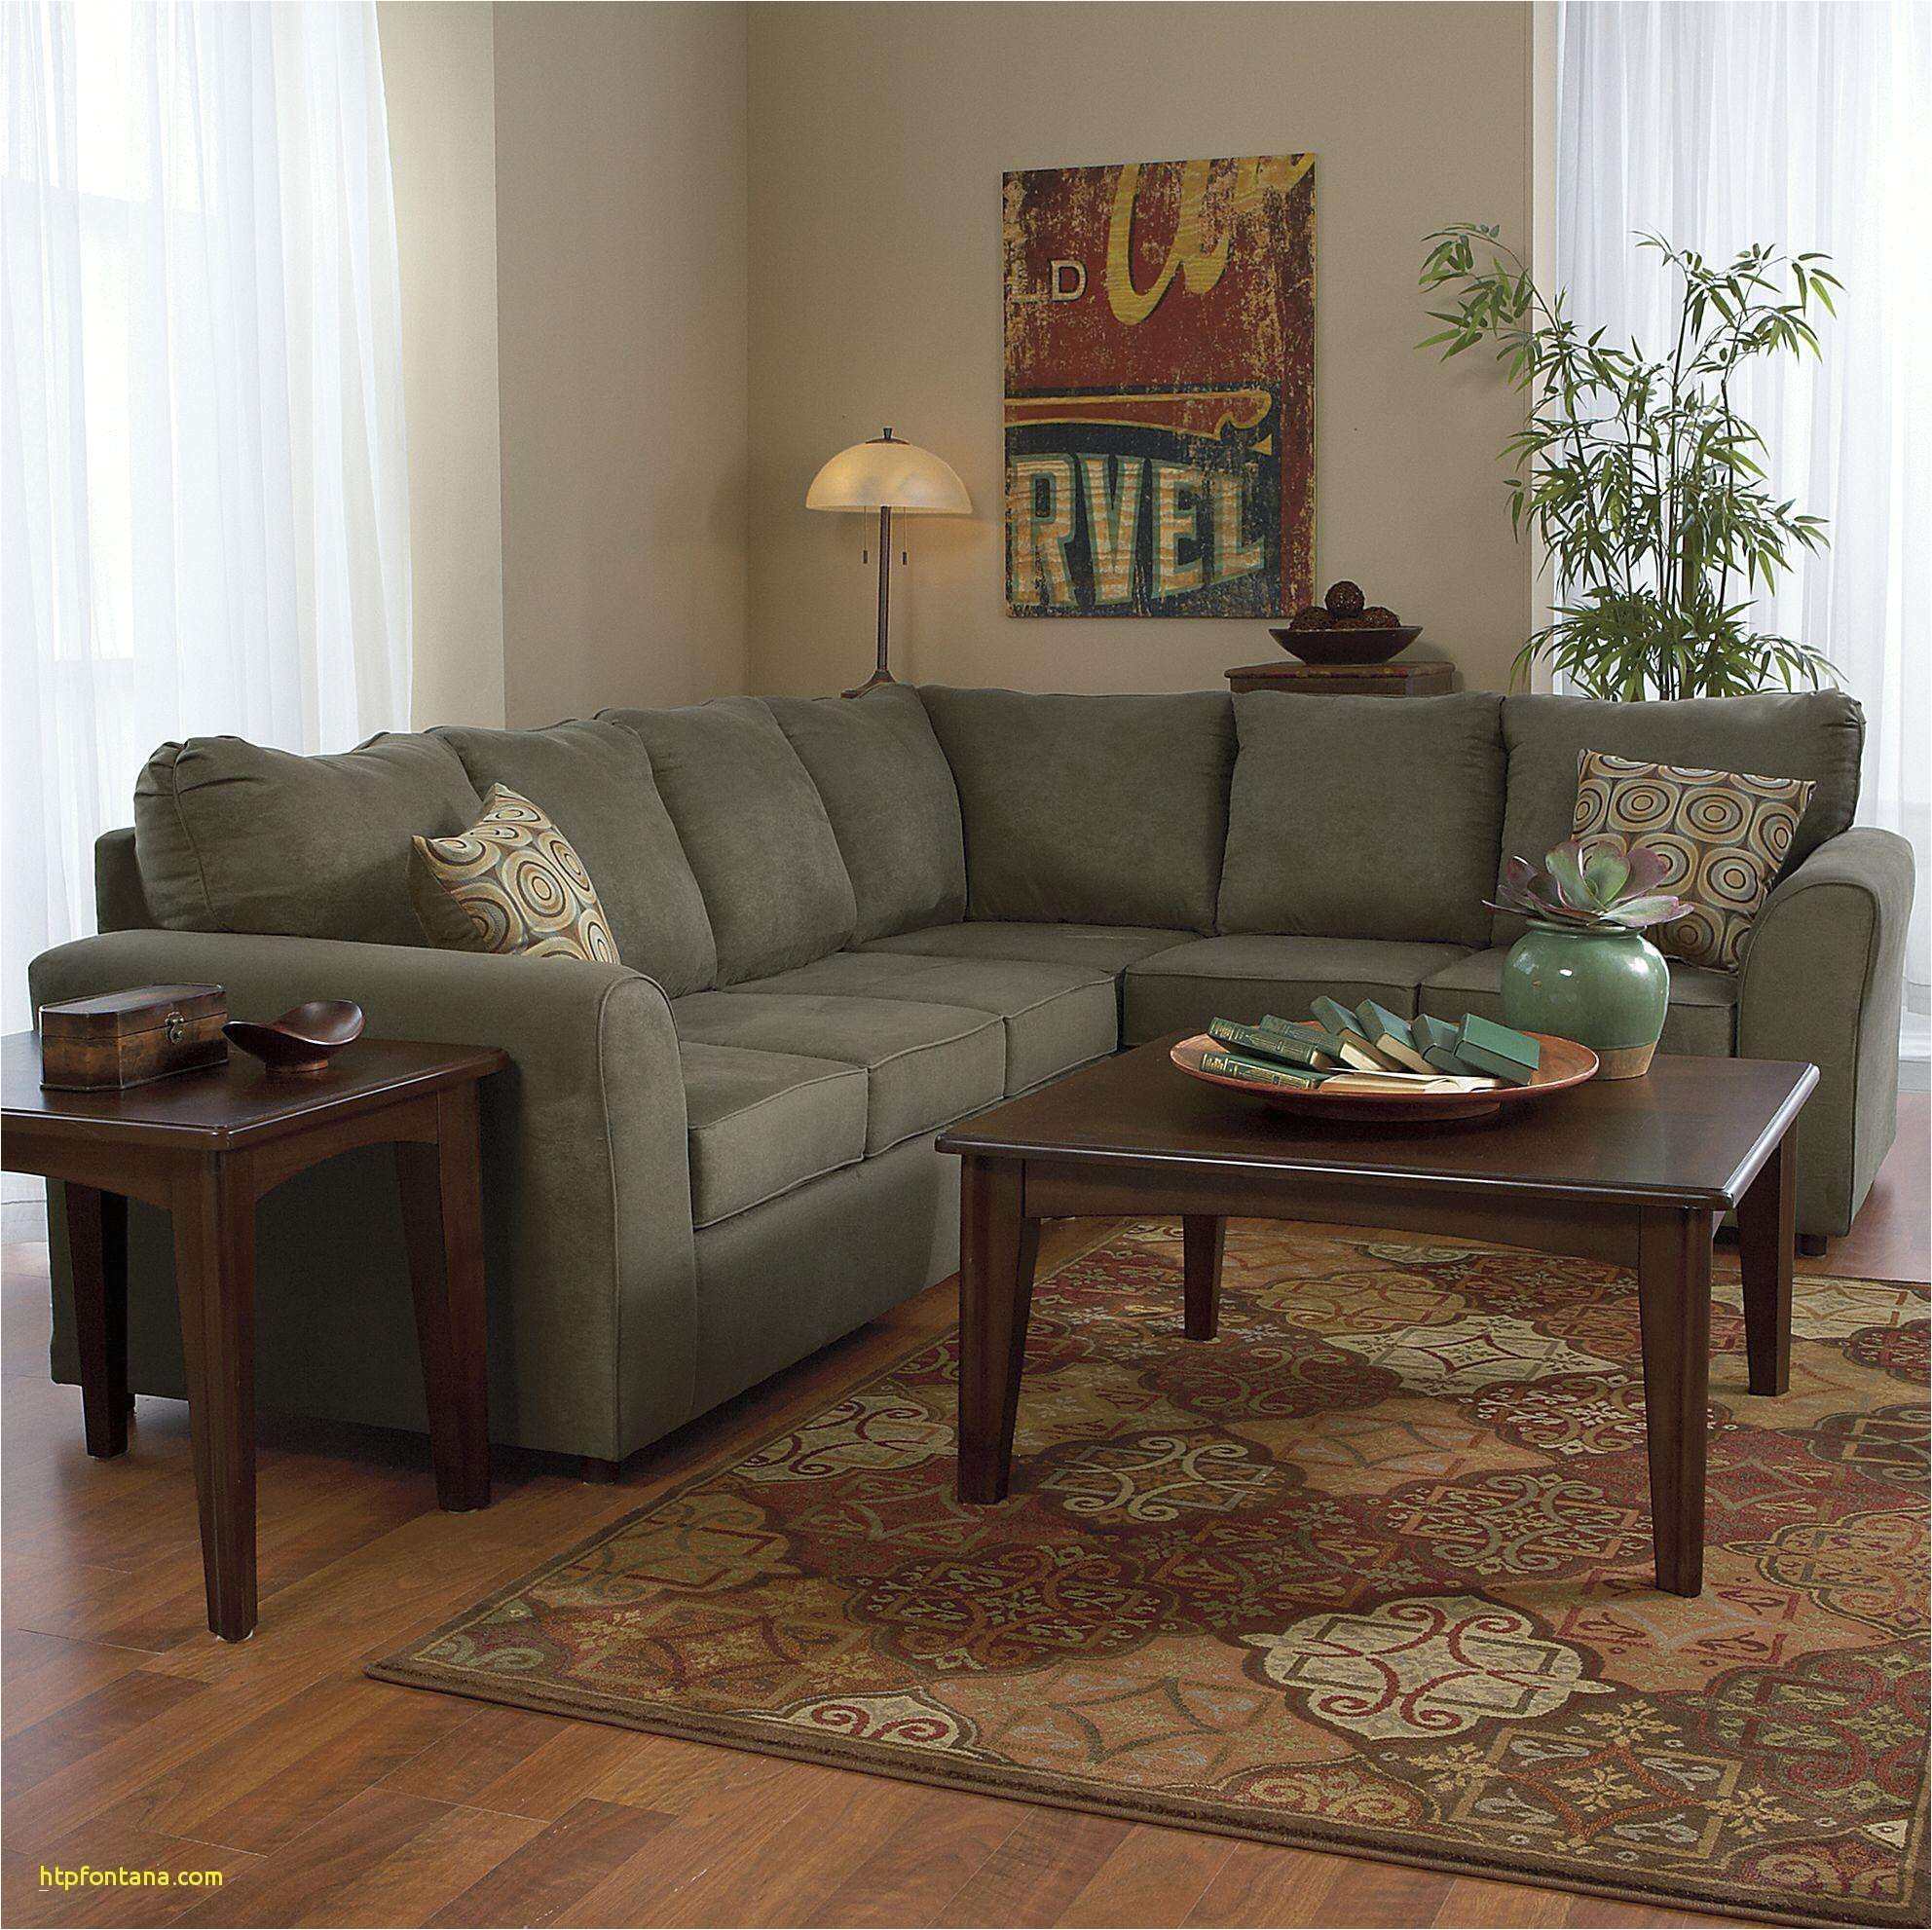 rustic decorating style ideas living room design image fresh furniture sleeper loveseat new wicker outdoor sofa